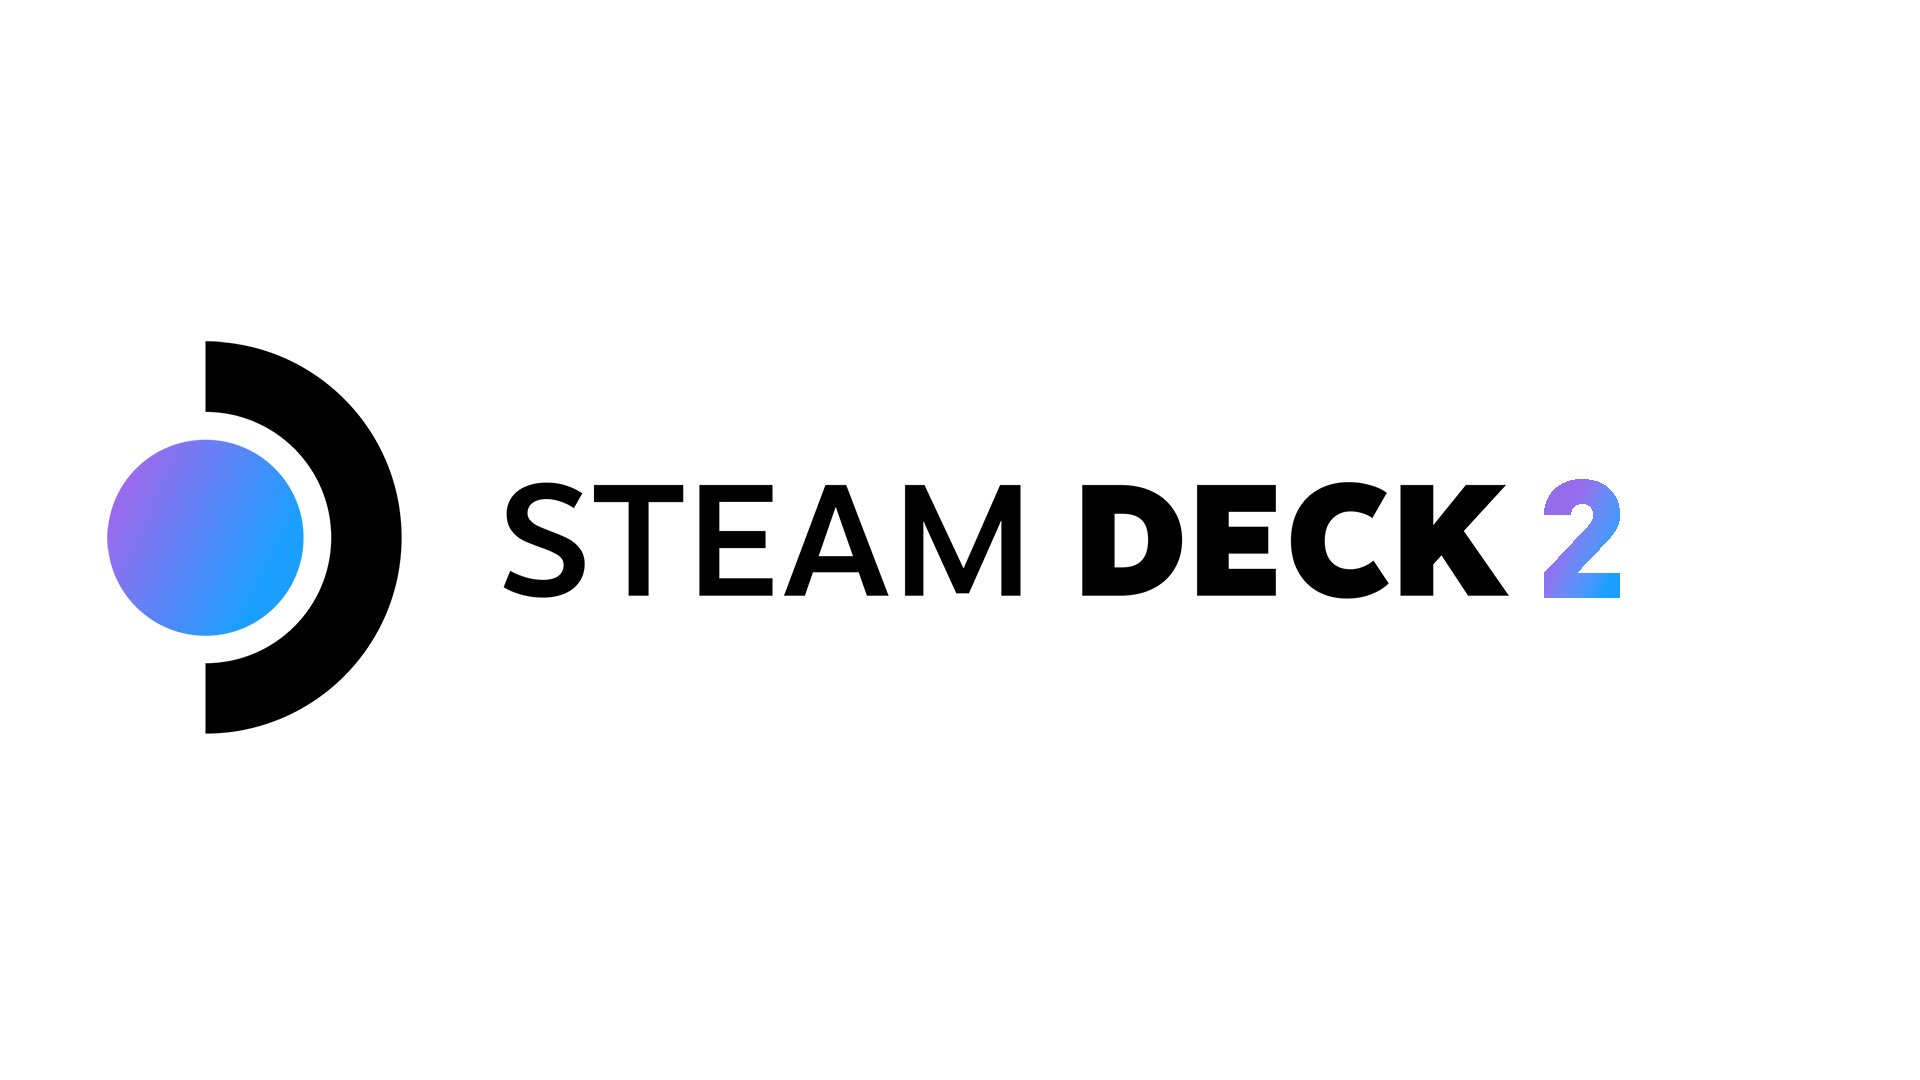 Steam Deck 2 mock logo